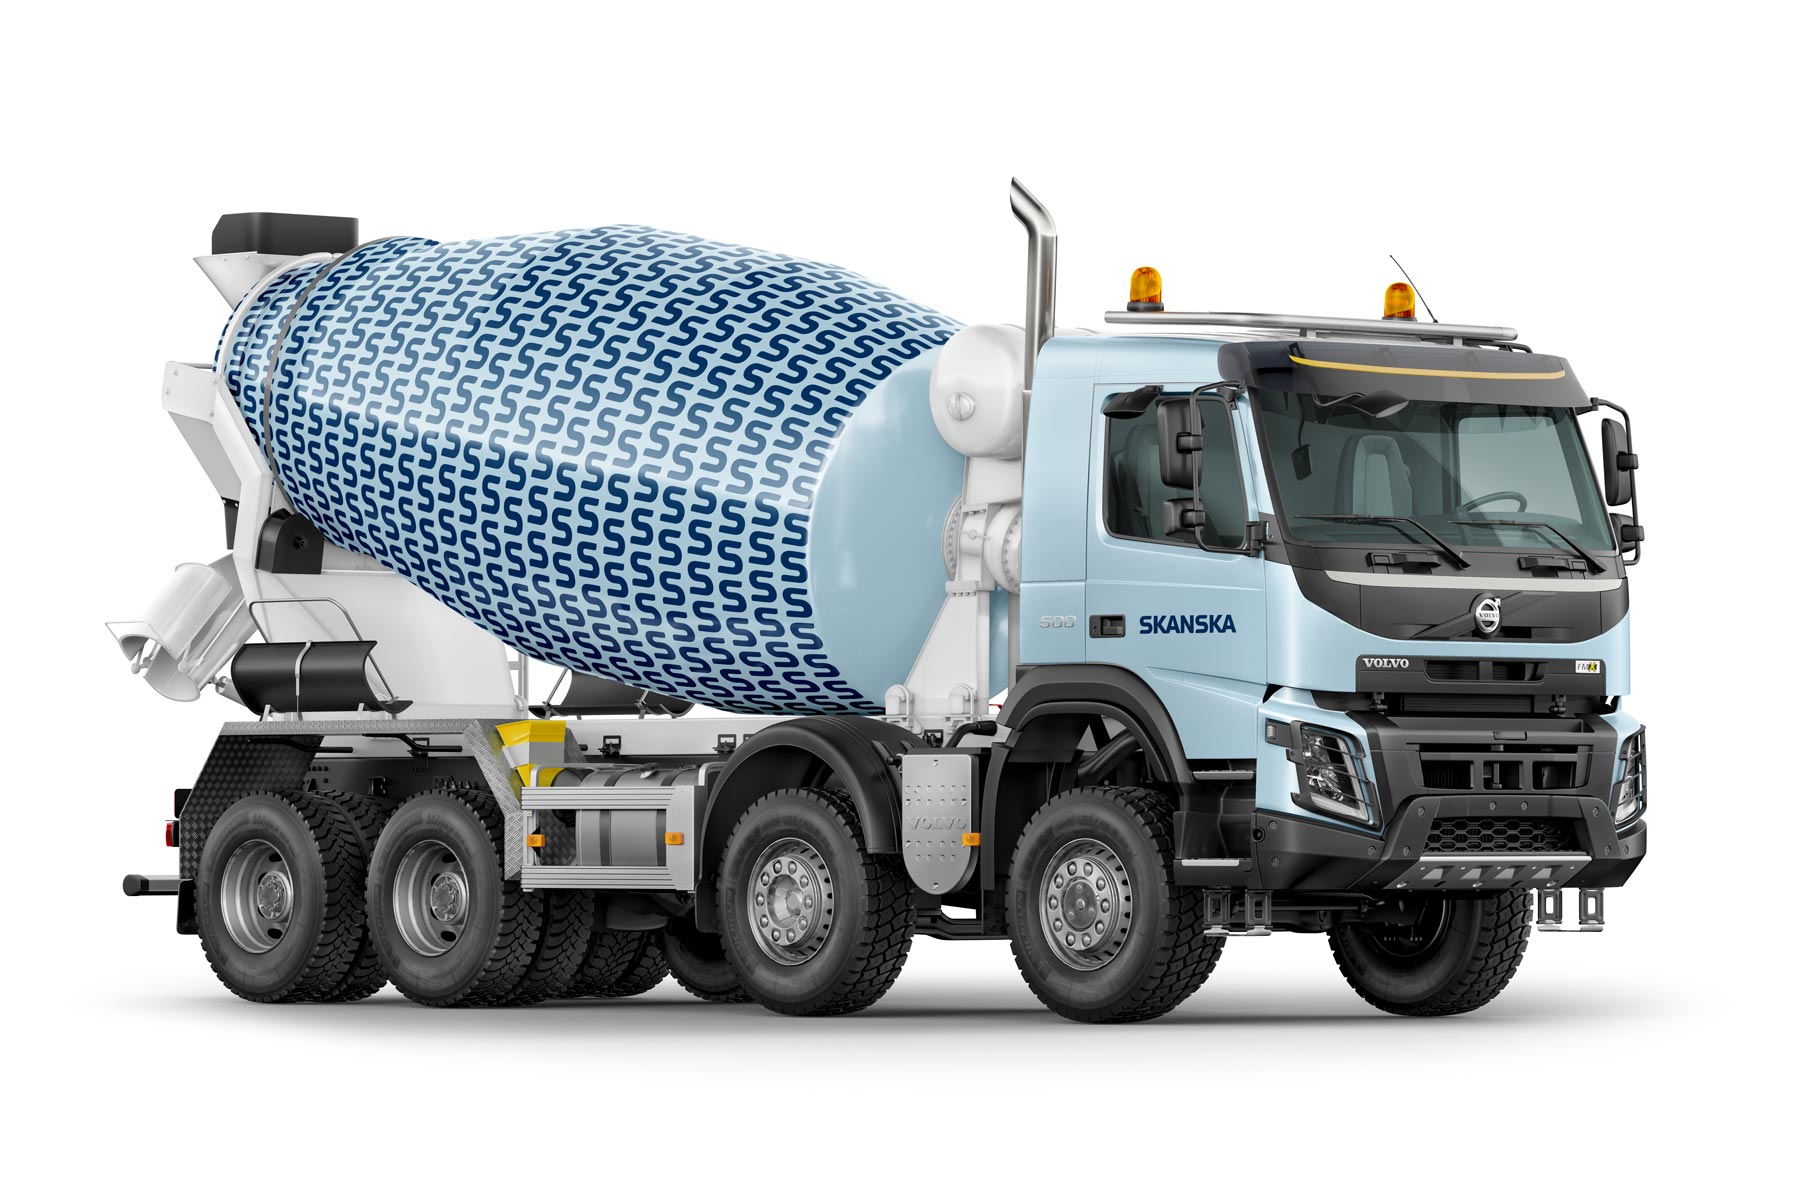 Skanska - Construction Company Logo on a Cement Truck